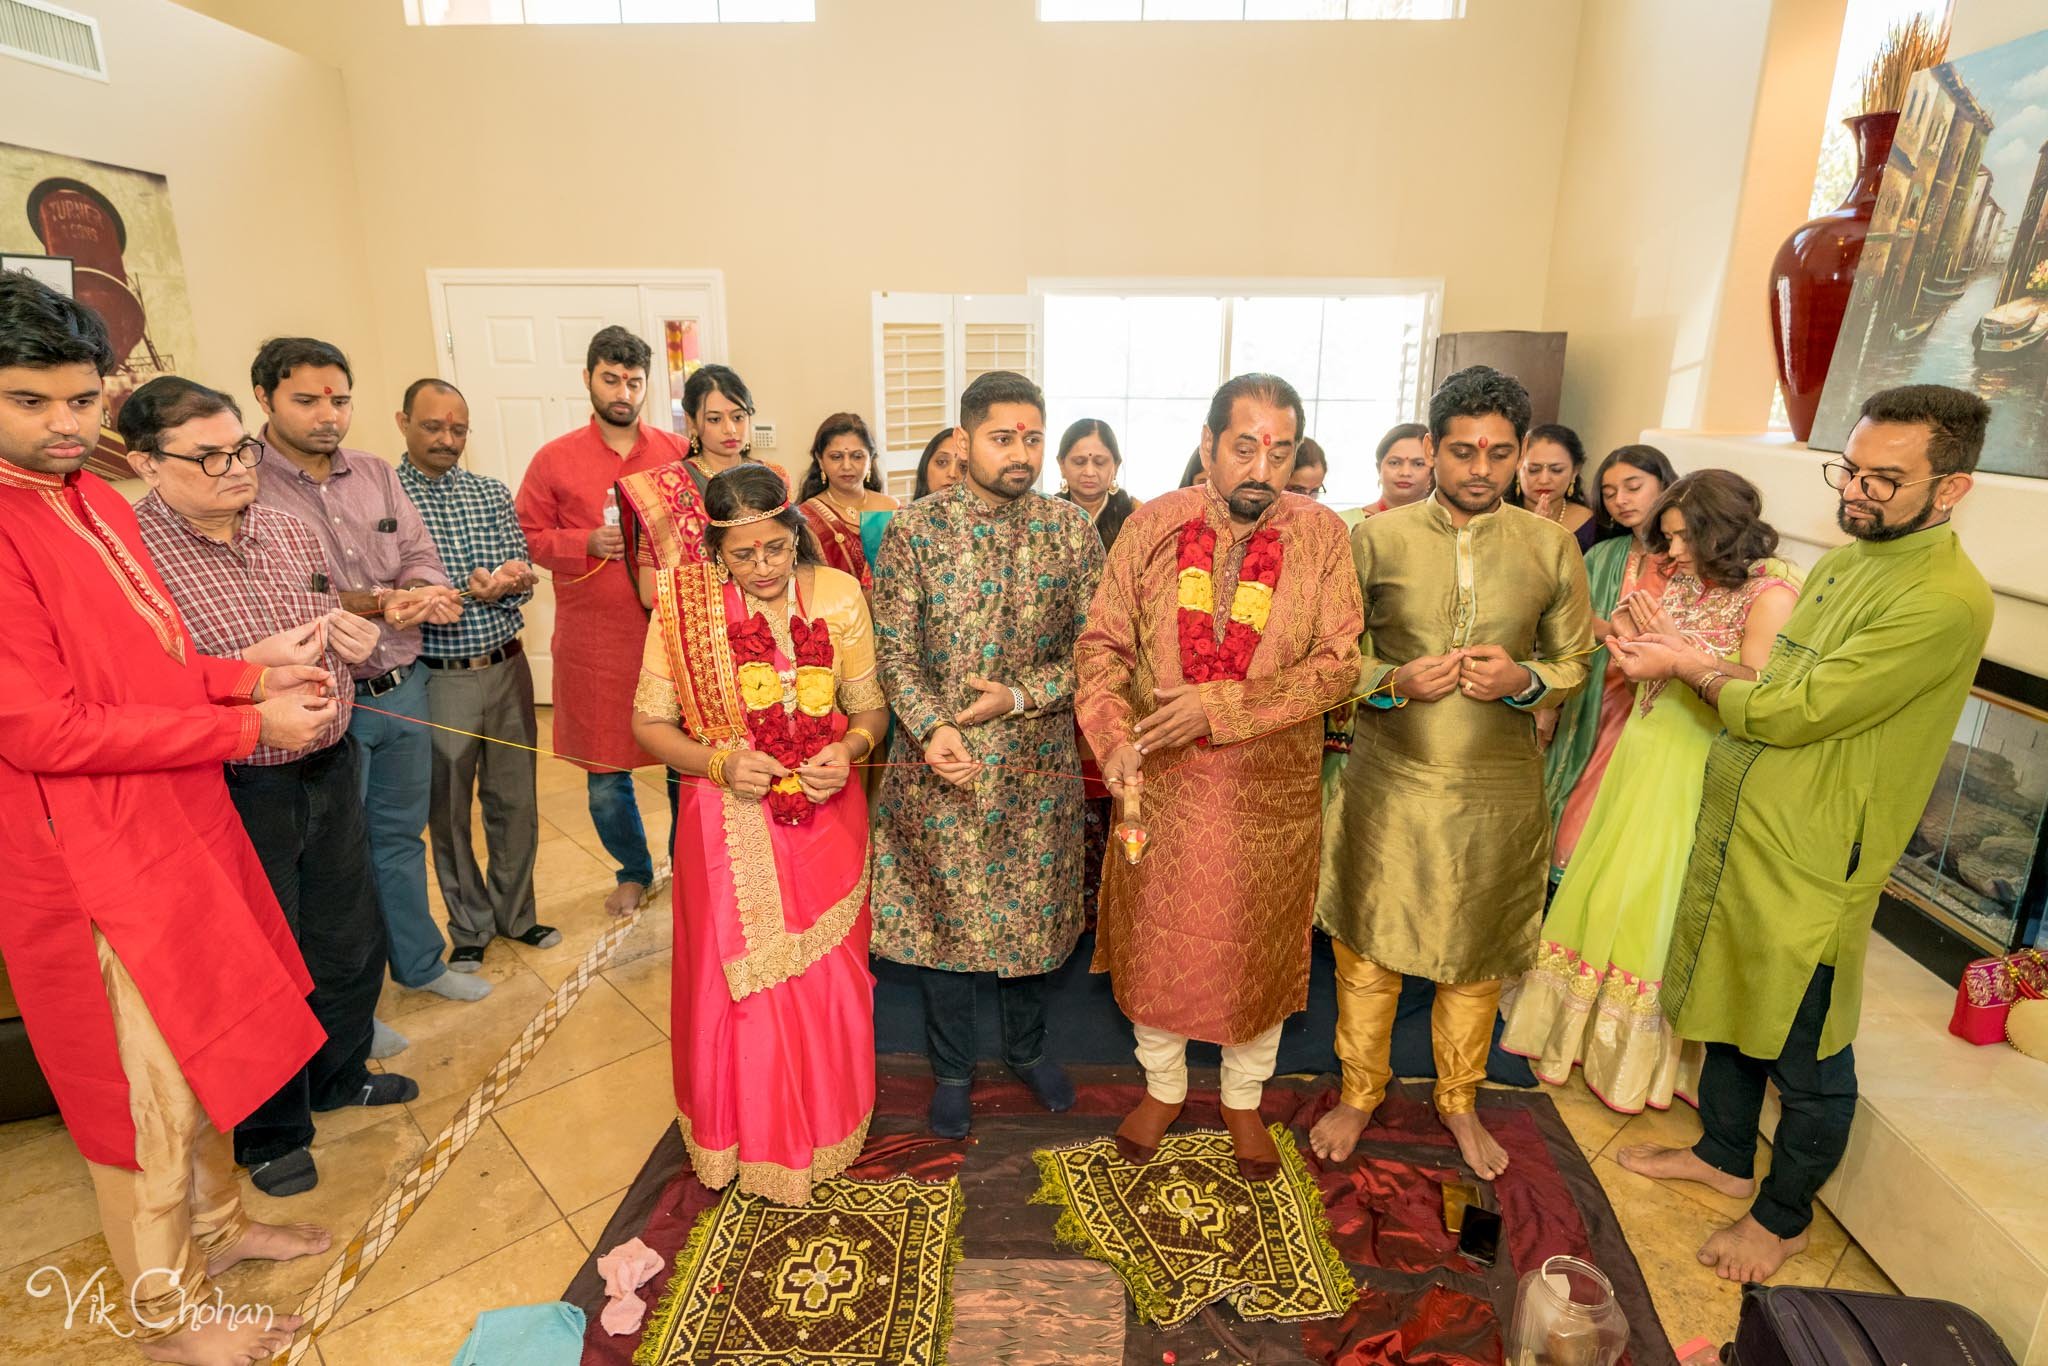 2022-02-03-Hely-&-Parth-Ganesh-Pooja-Indian-Wedding-Vik-Chohan-Photography-Photo-Booth-Social-Media-VCP-121.jpg